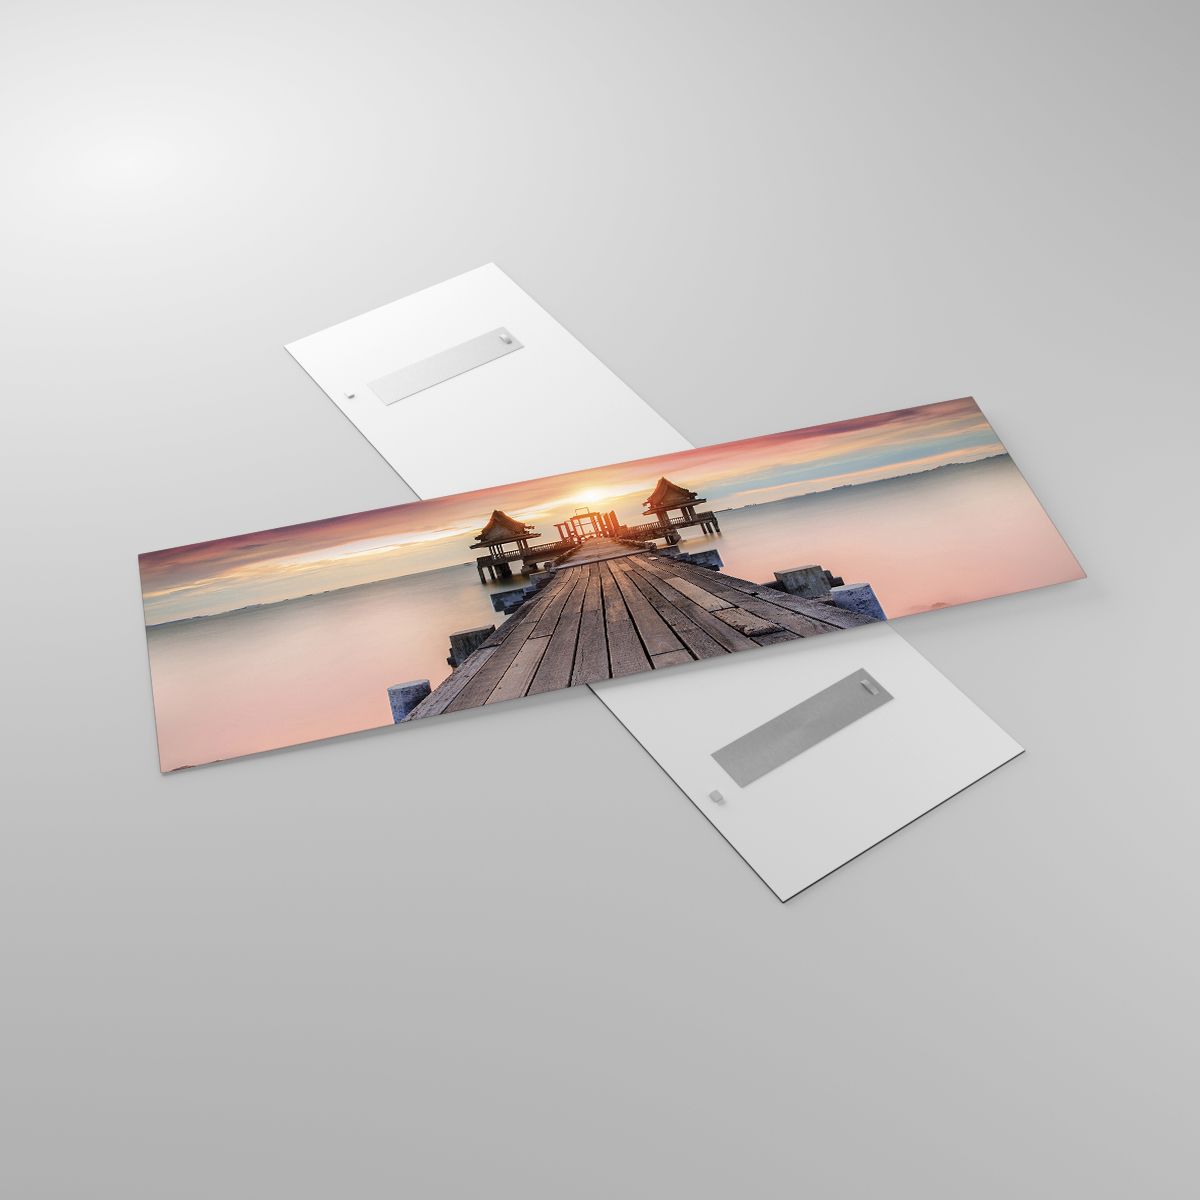 Glasbild Landschaft, Glasbild Holzsteg, Glasbild Meer, Glasbild Der Sonnenuntergang, Glasbild Horizont